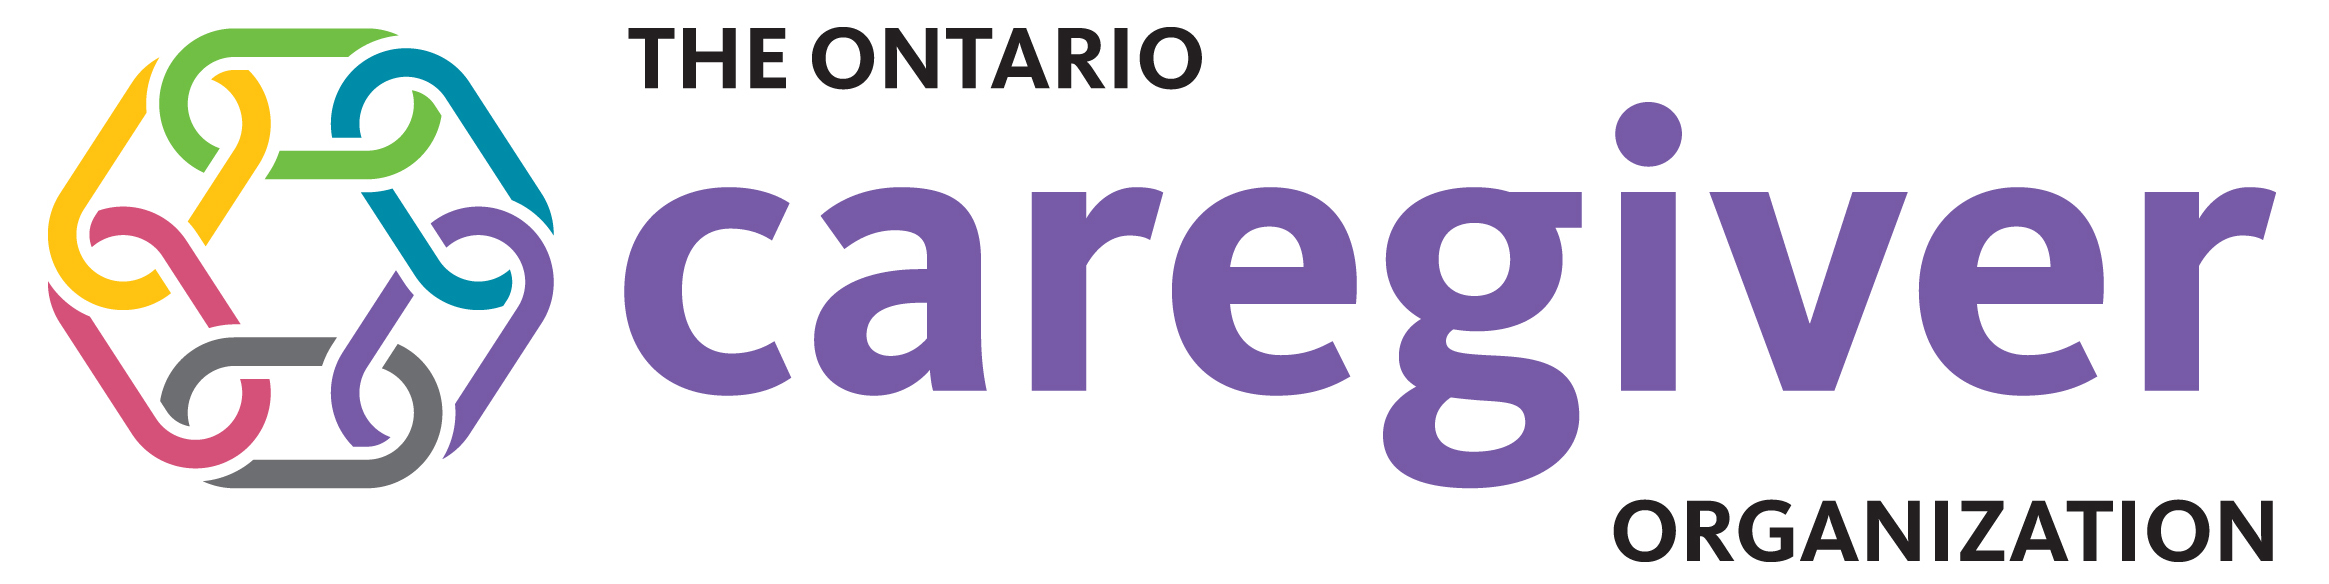 Ontario Caregiver Organization (OCO)